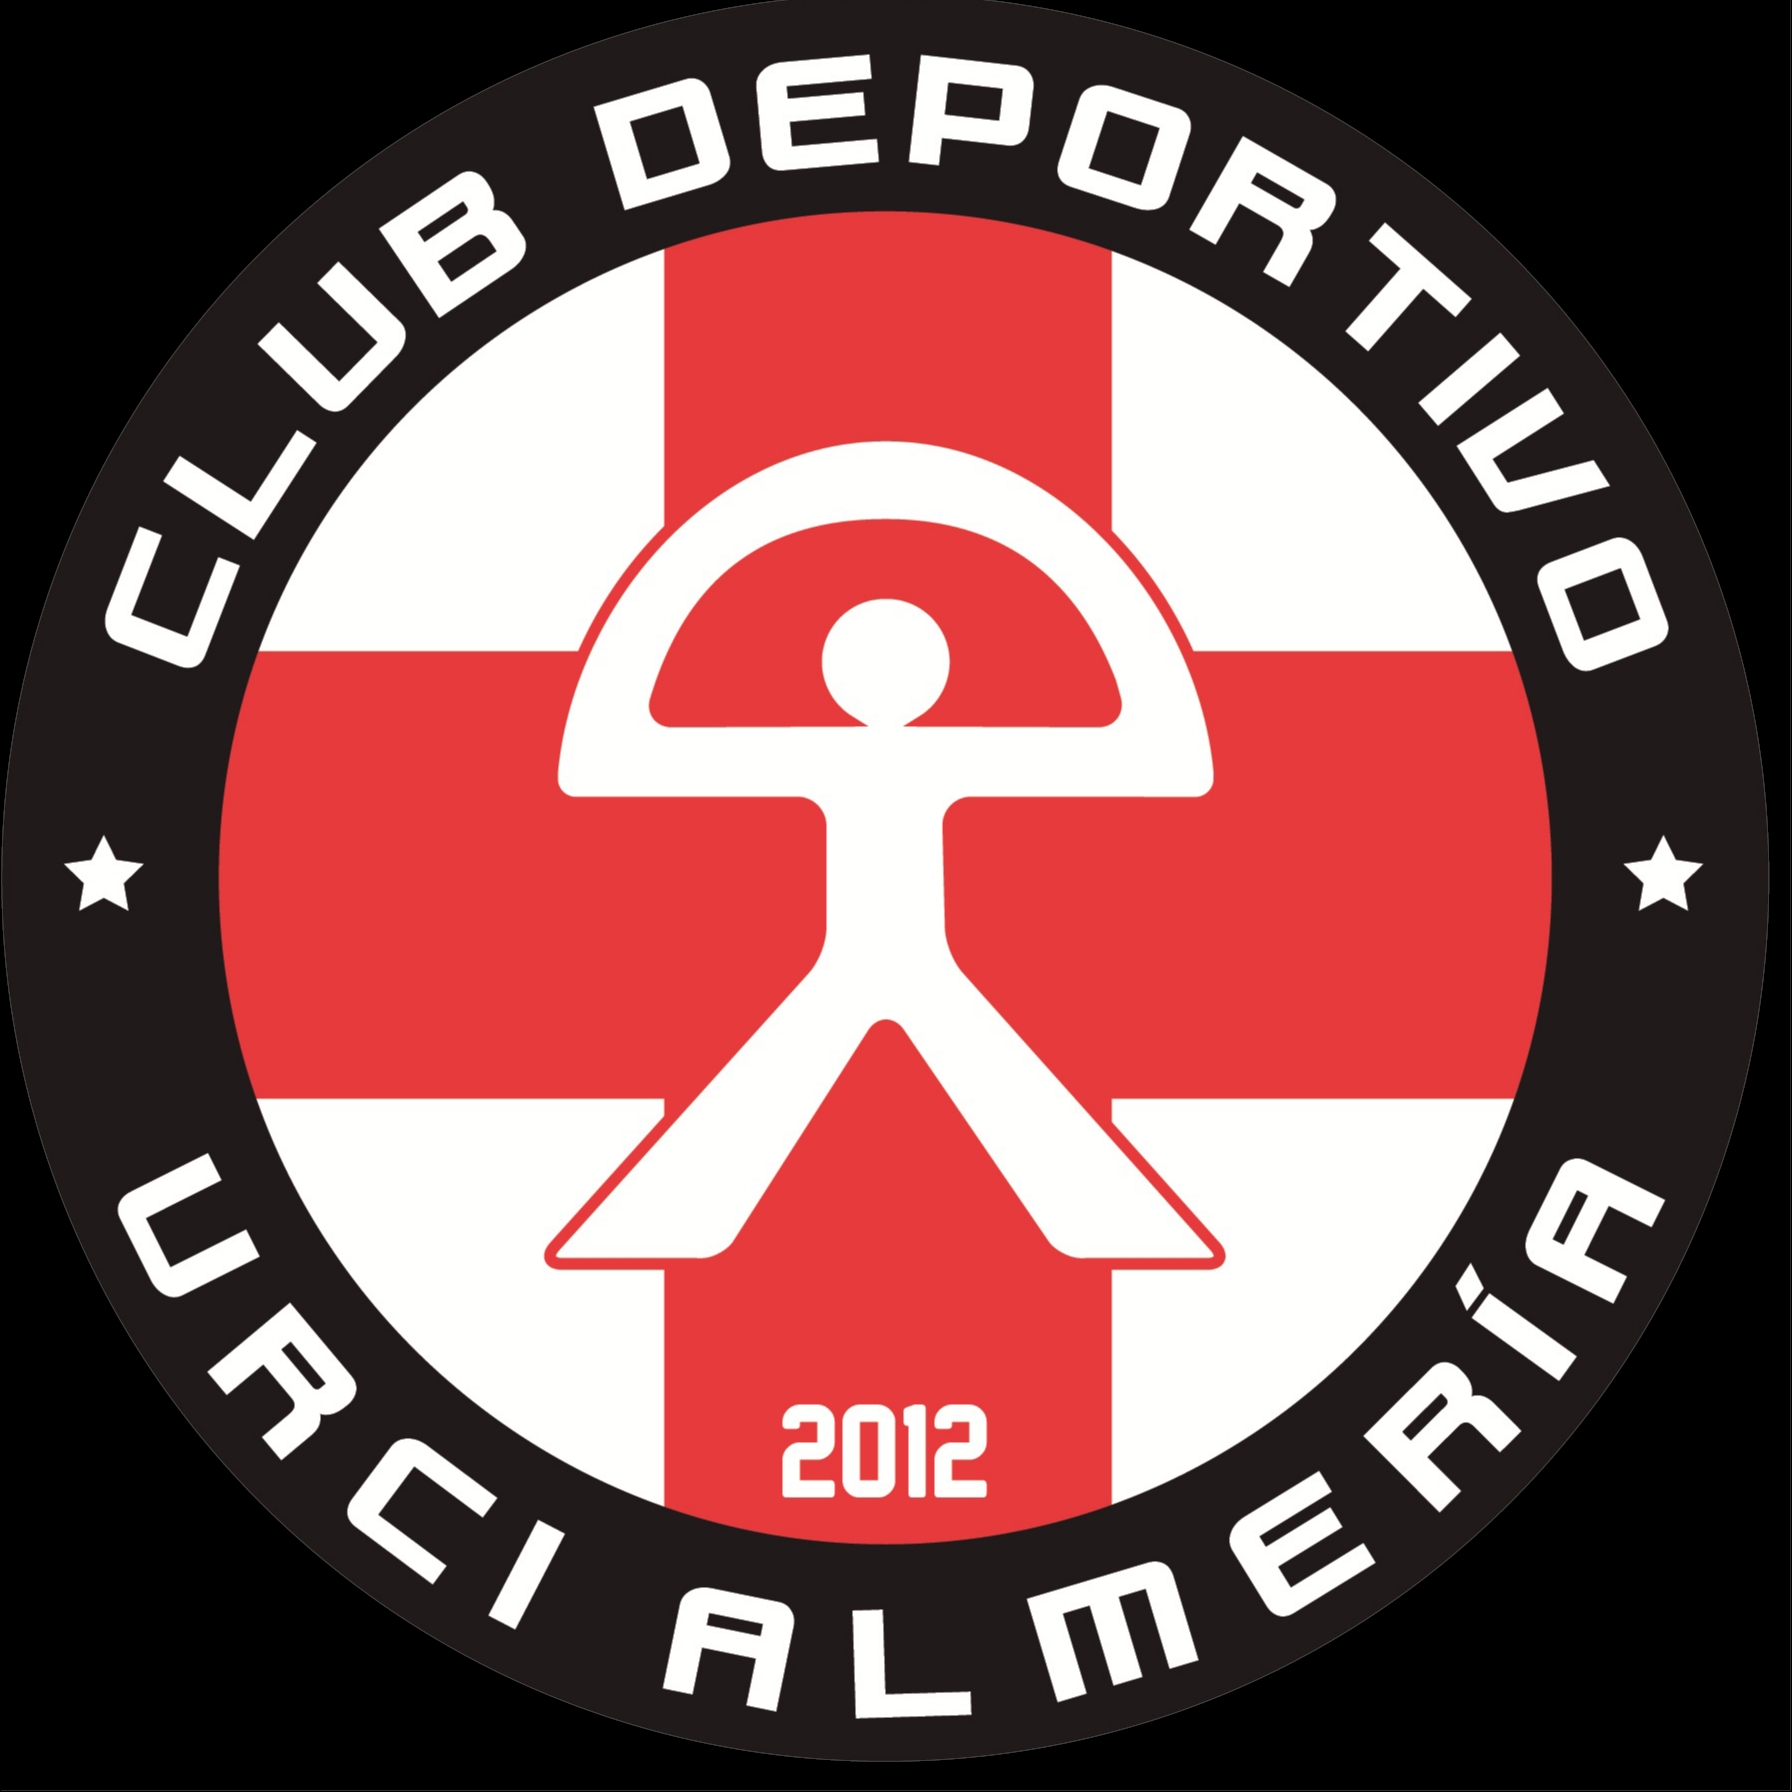 CLUB DEPORTIVO URCI ALMERIA